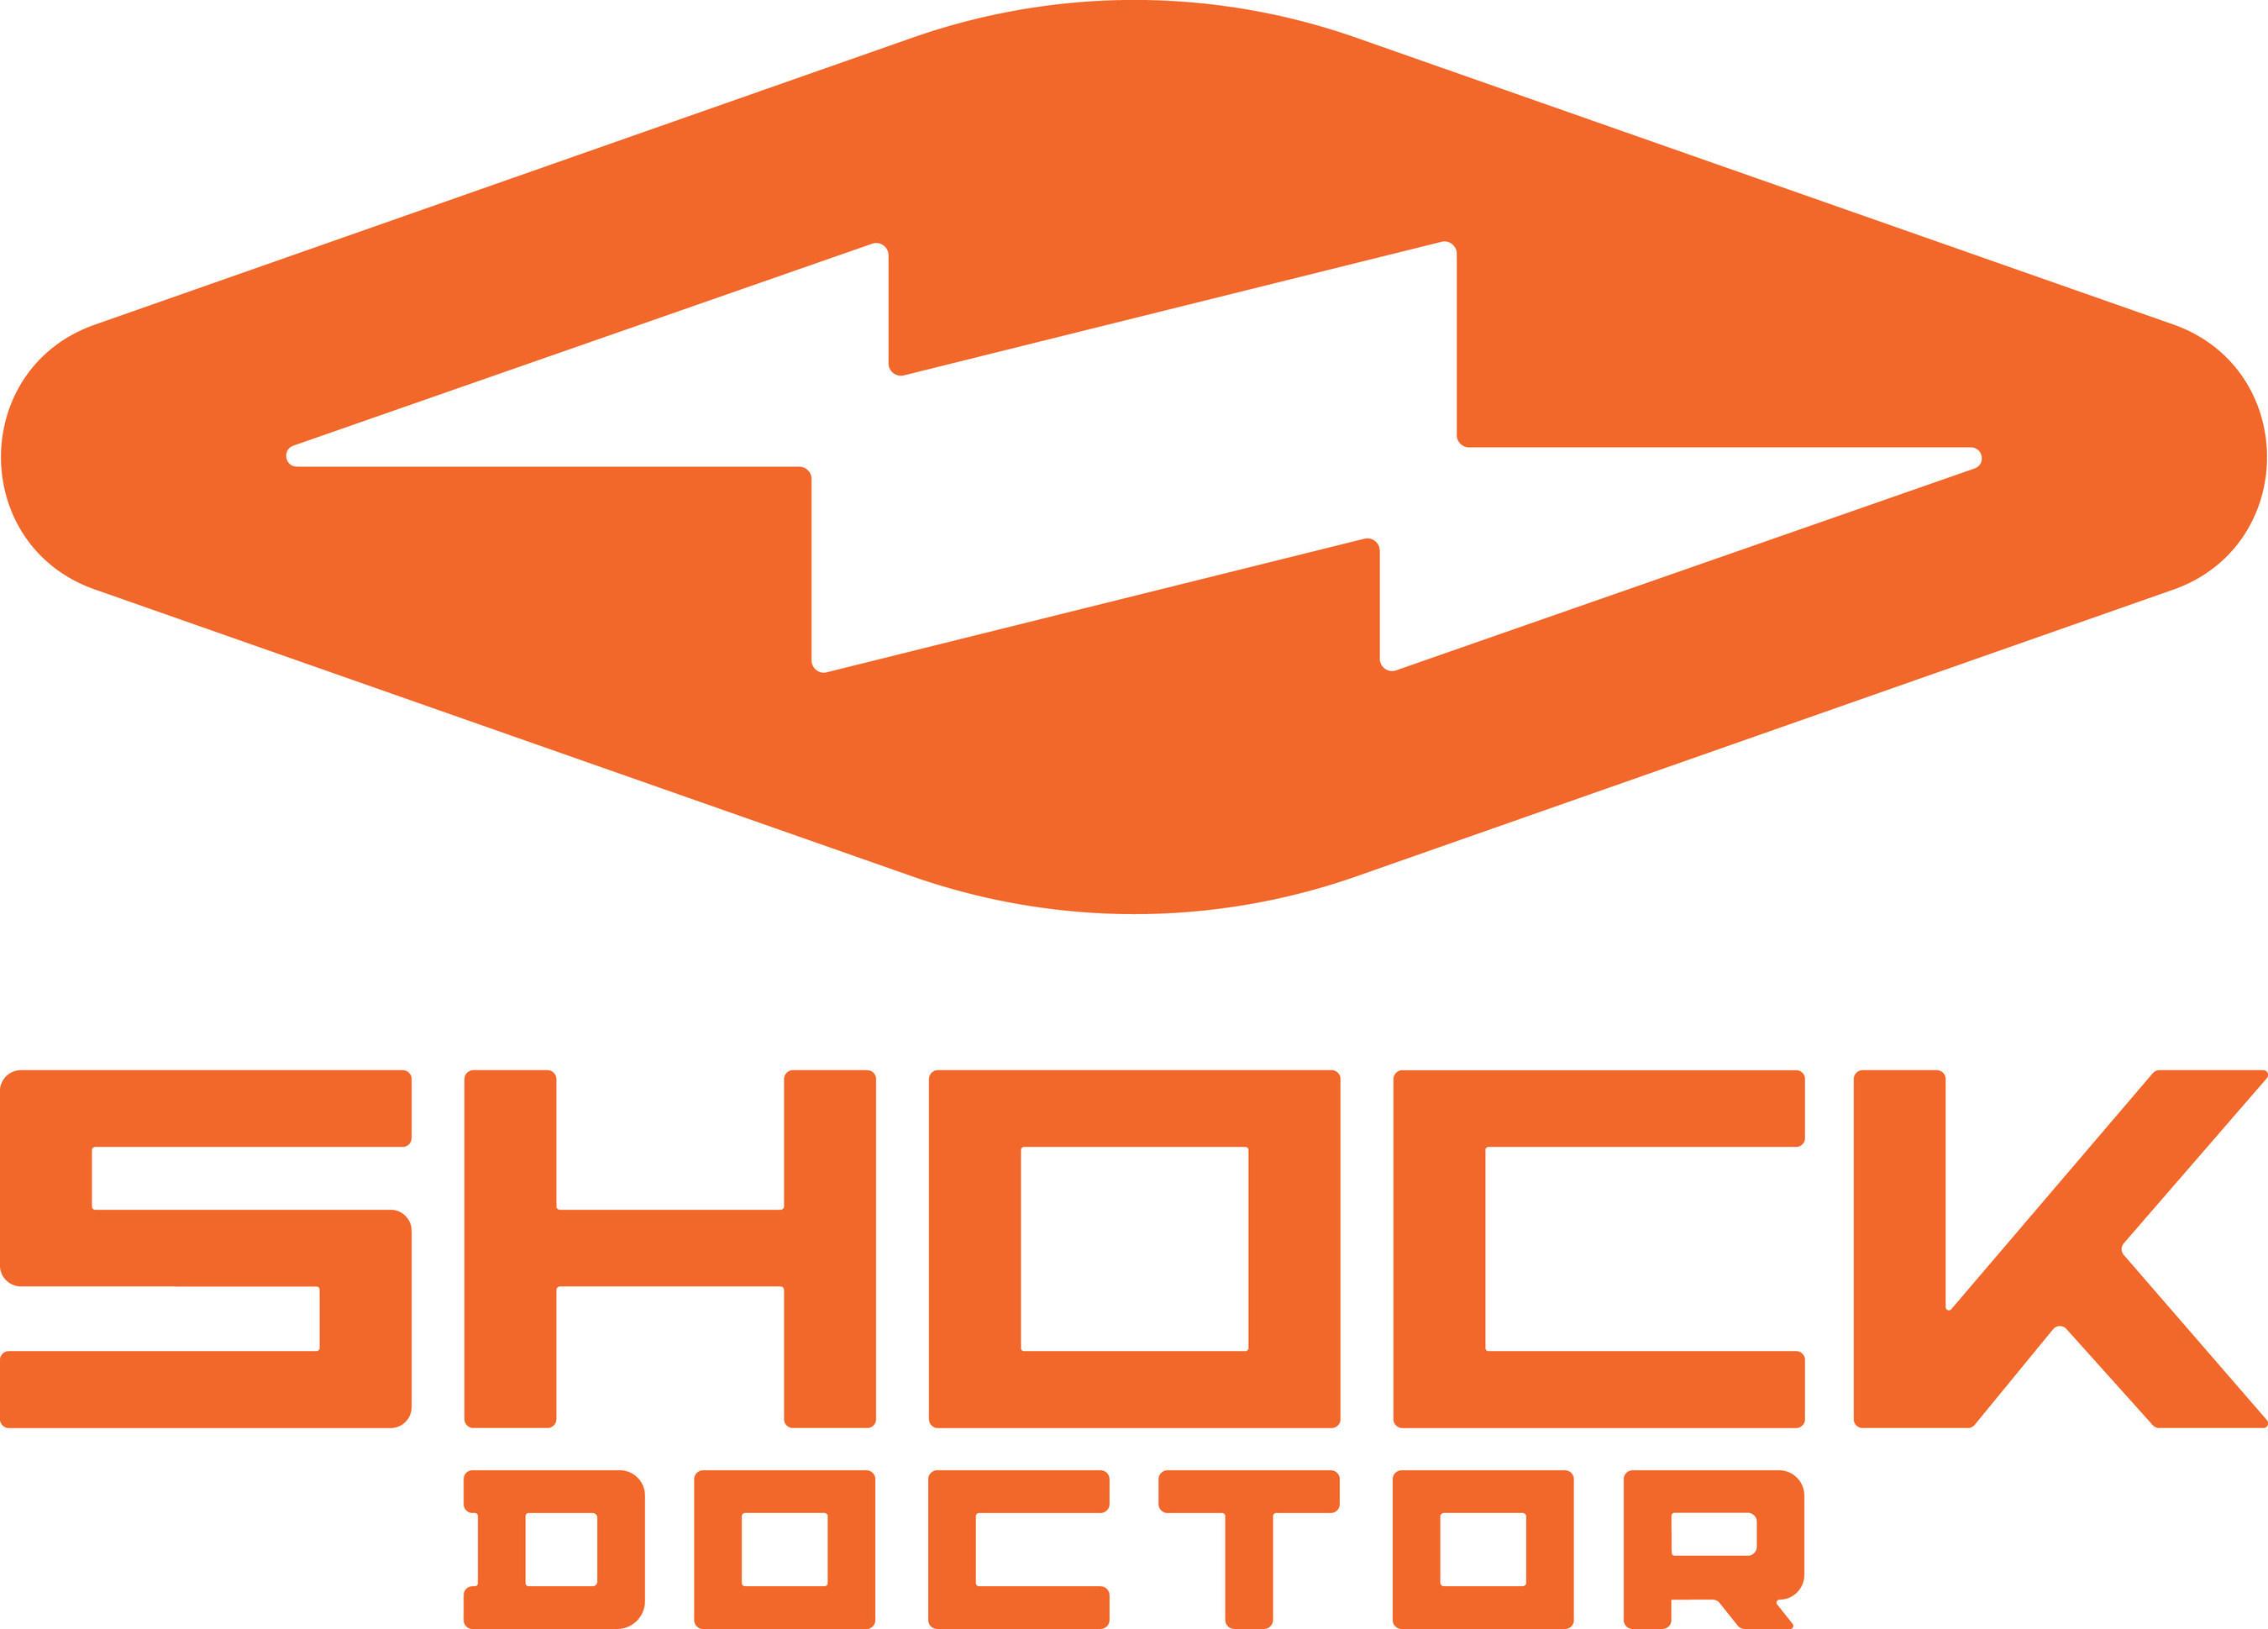 Shock Doctor logo